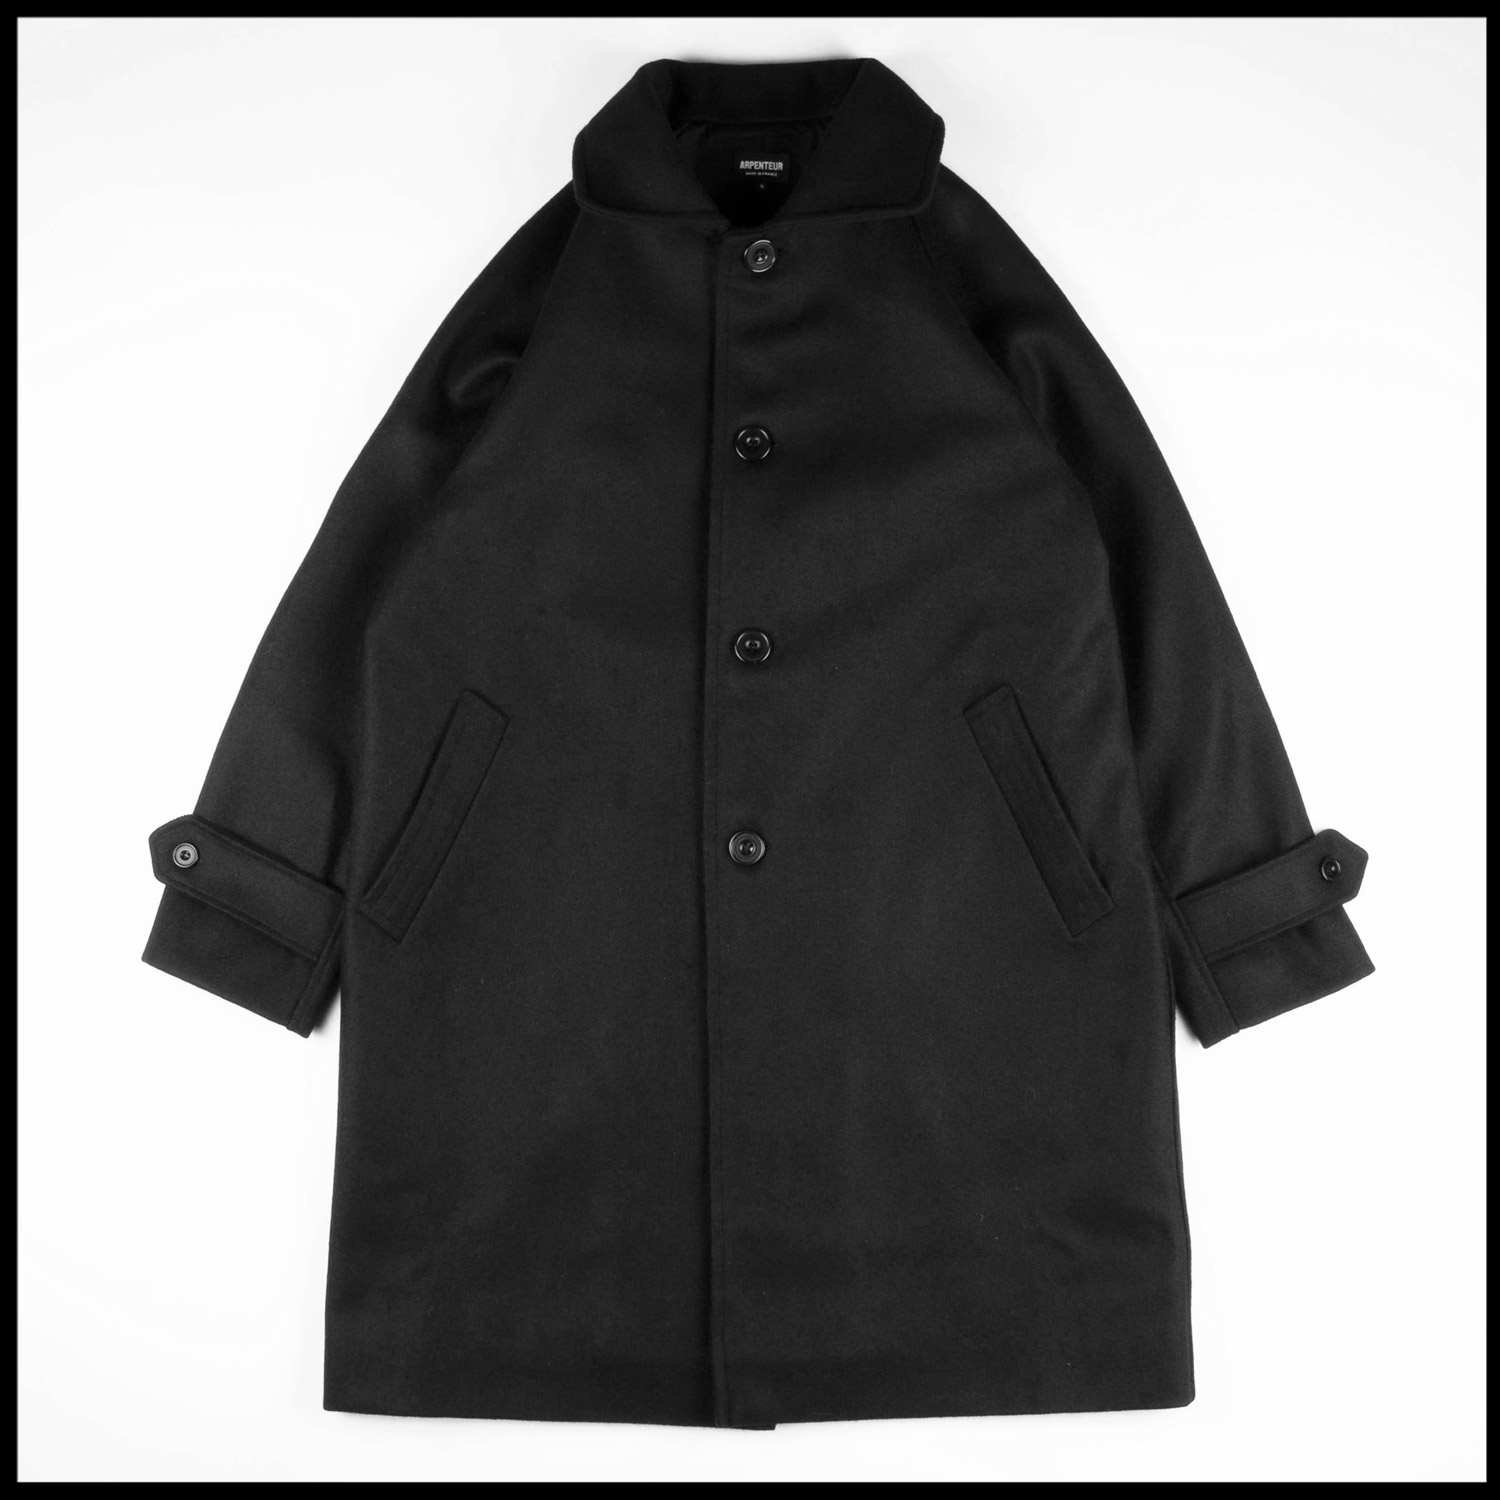 UTILE coat in Black color by Arpenteur